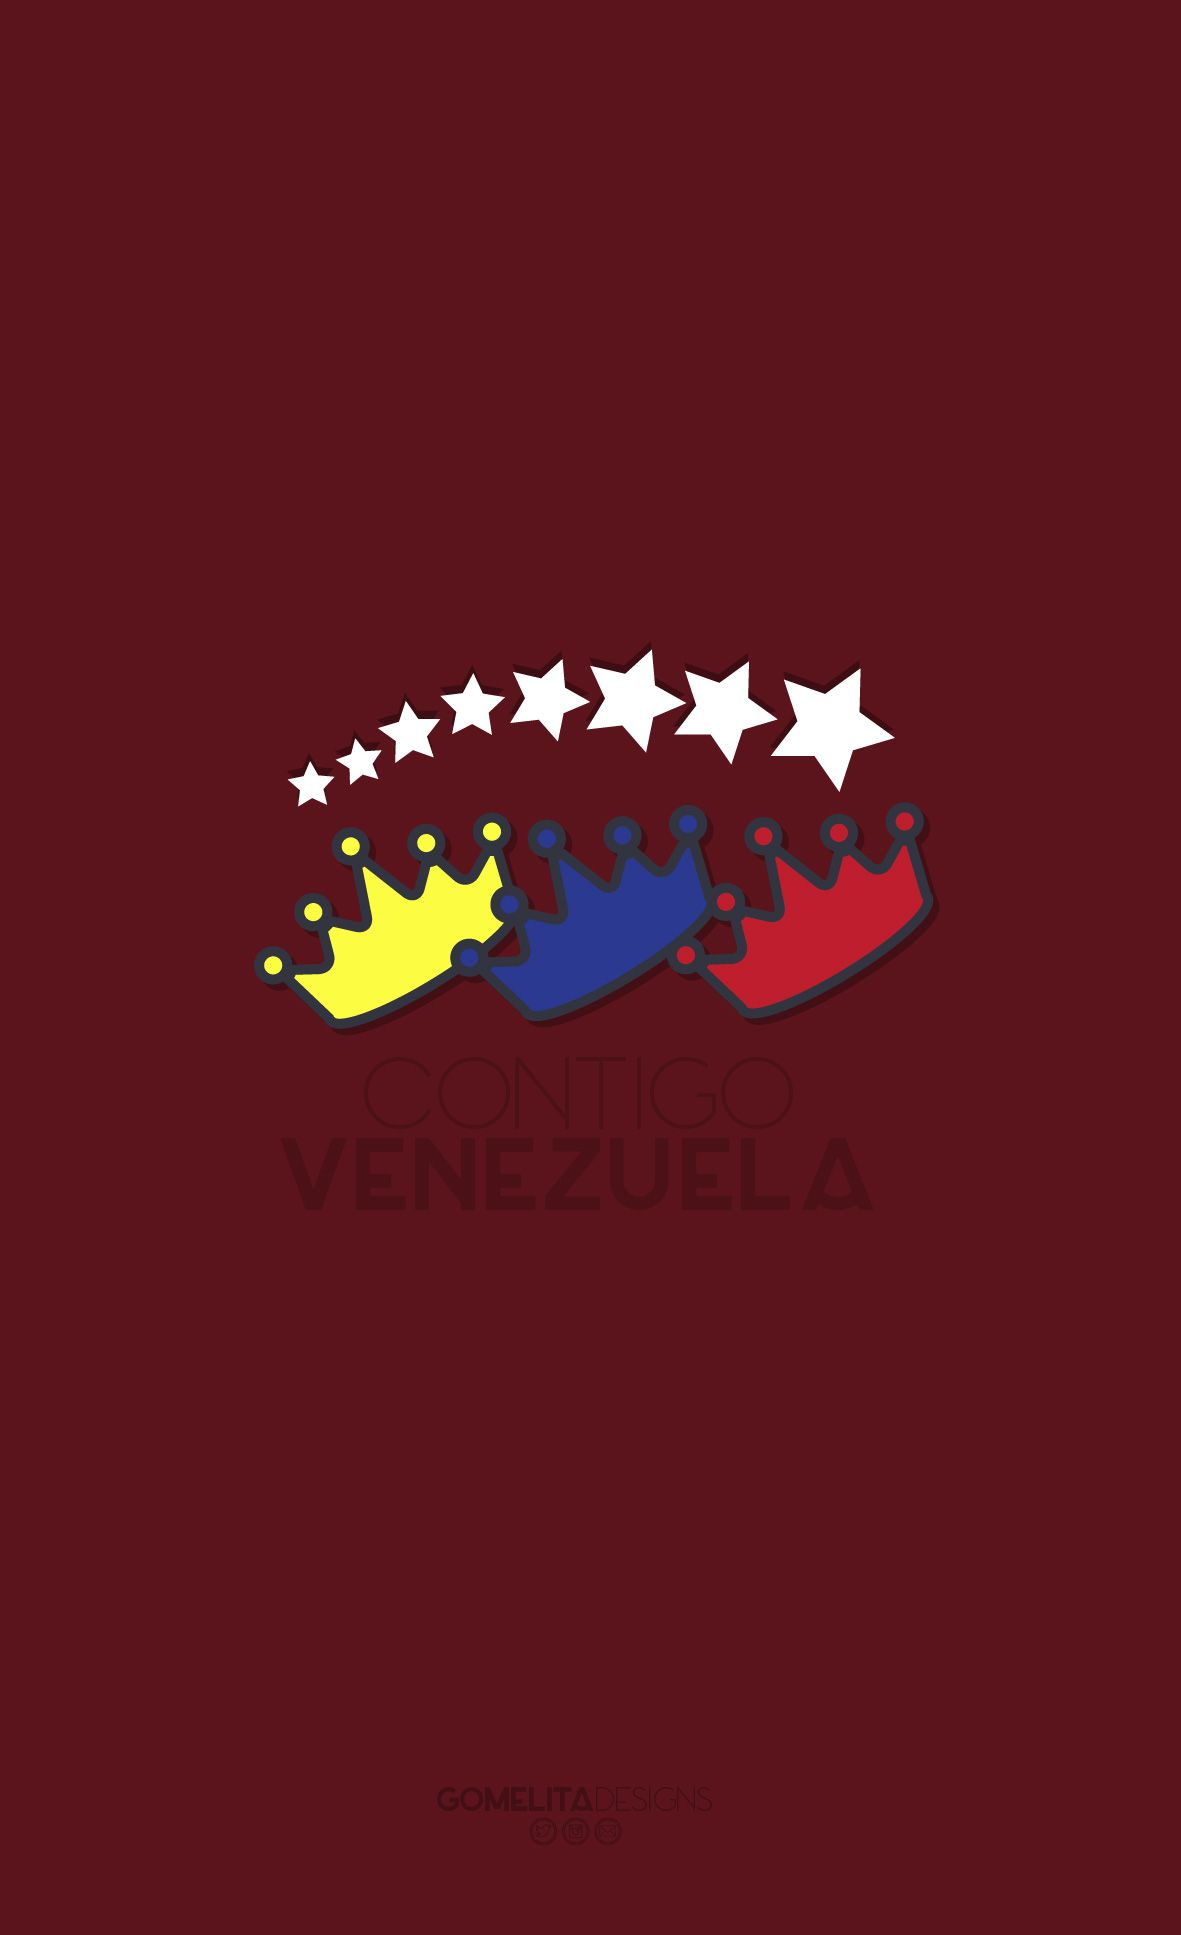 1181x1935 Wallpapers para iphone #GomelitaDesigns #Dise&Atilde;&plusmn;o #Dise&Atilde;&plusmn;oGrafico #Venezuela #Vinotinto | Diy canvas art, Iphone wallpaper, Wallpaper